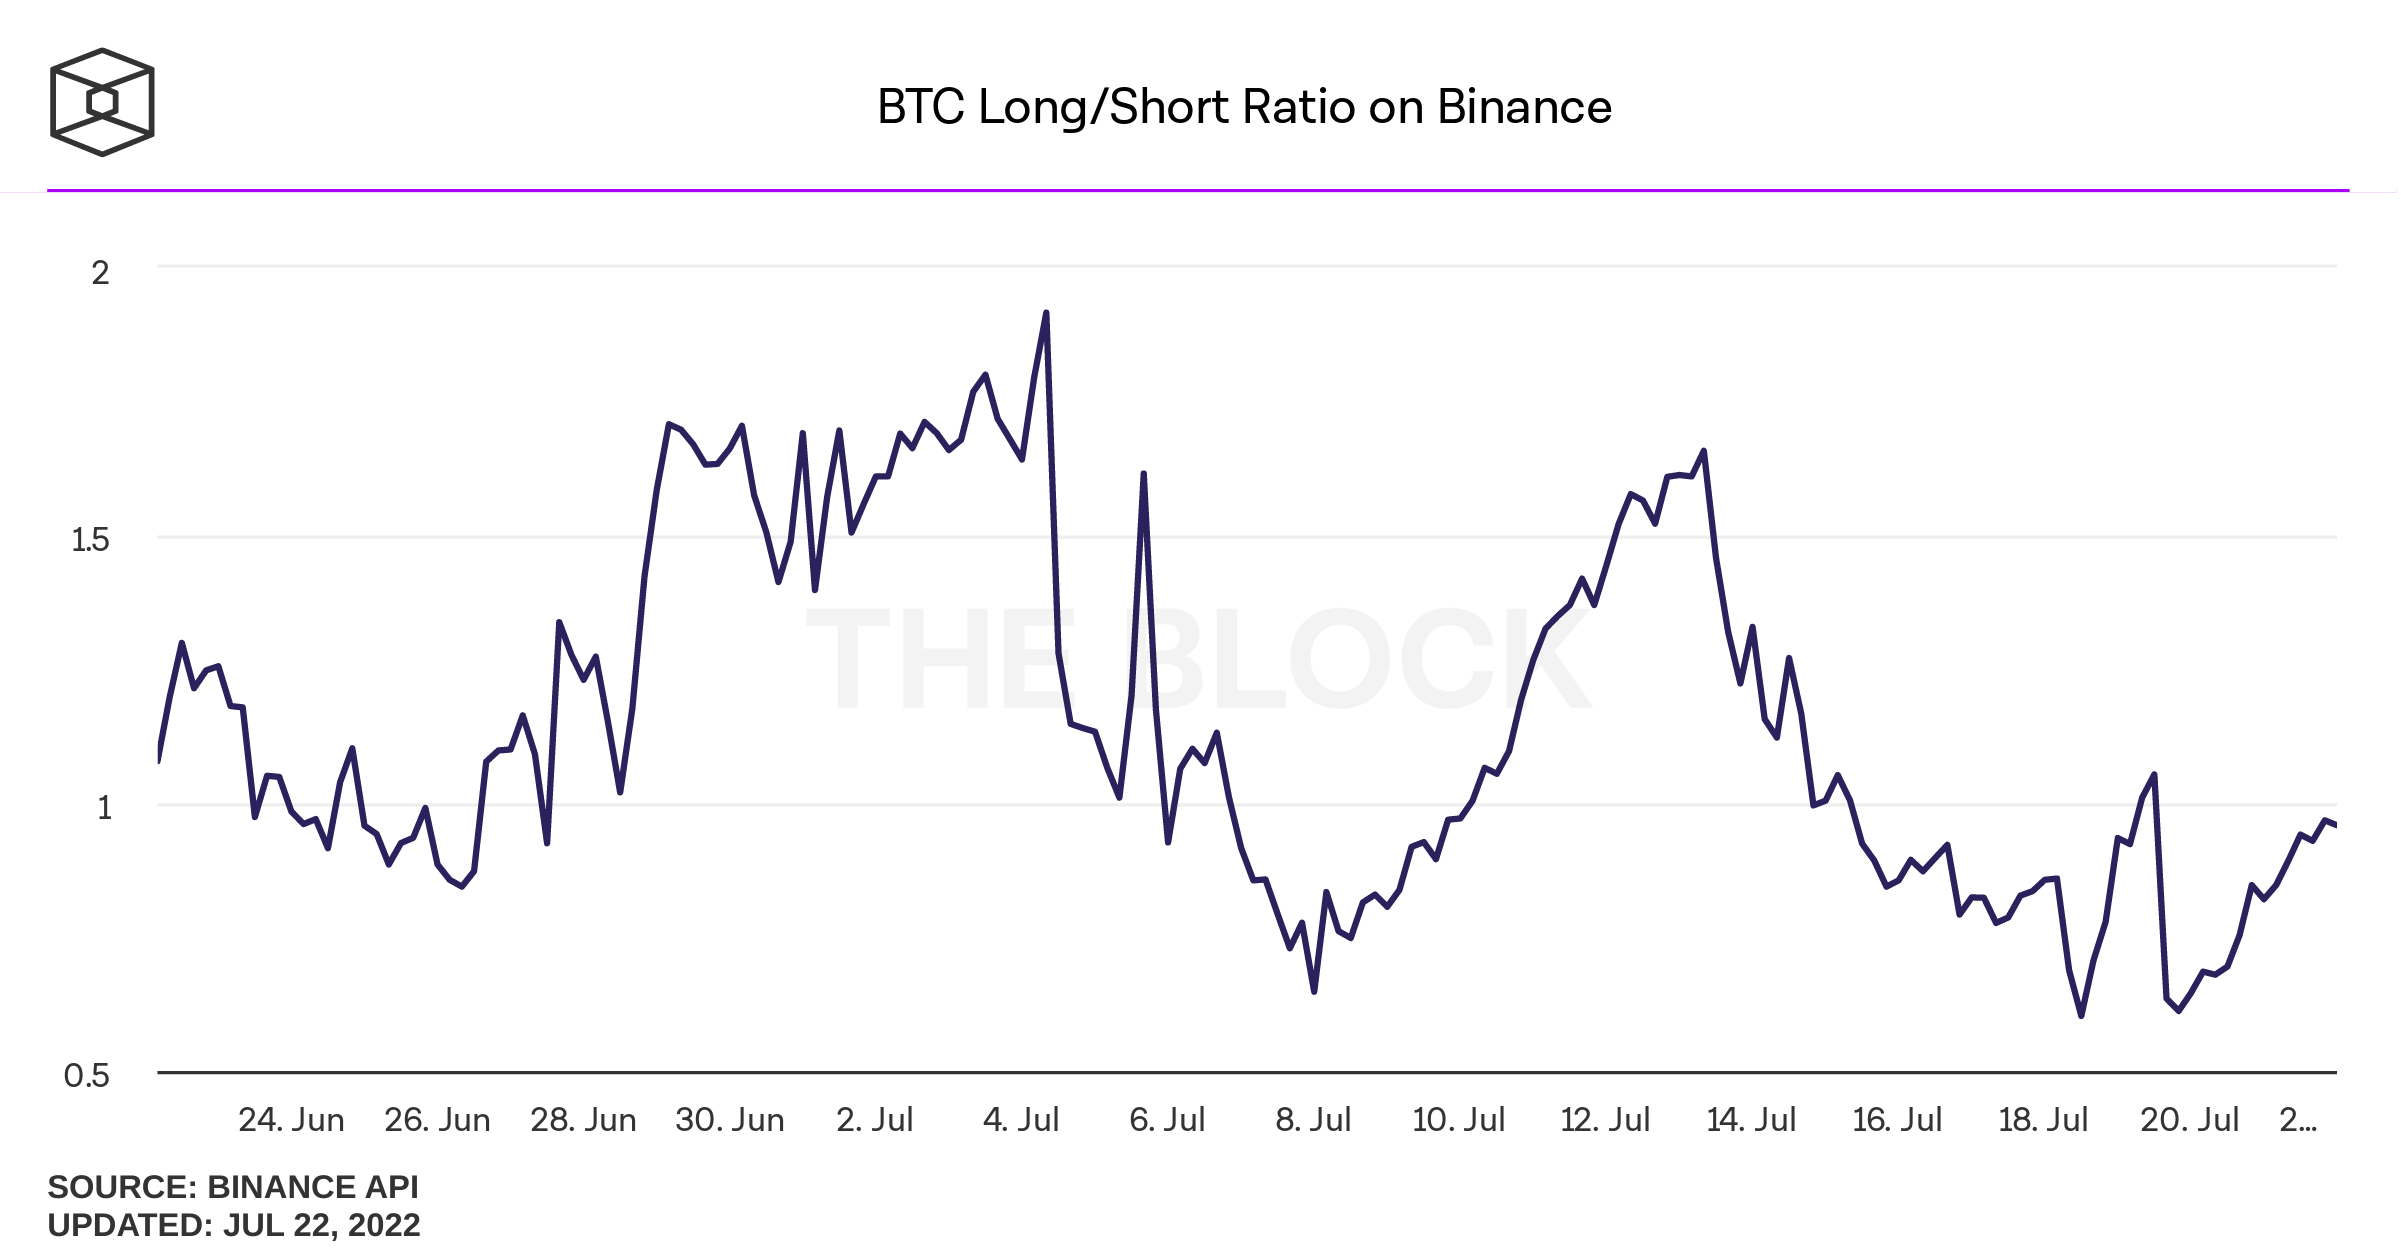 btc-long-short-ratio-on-binance 22-07-22.png